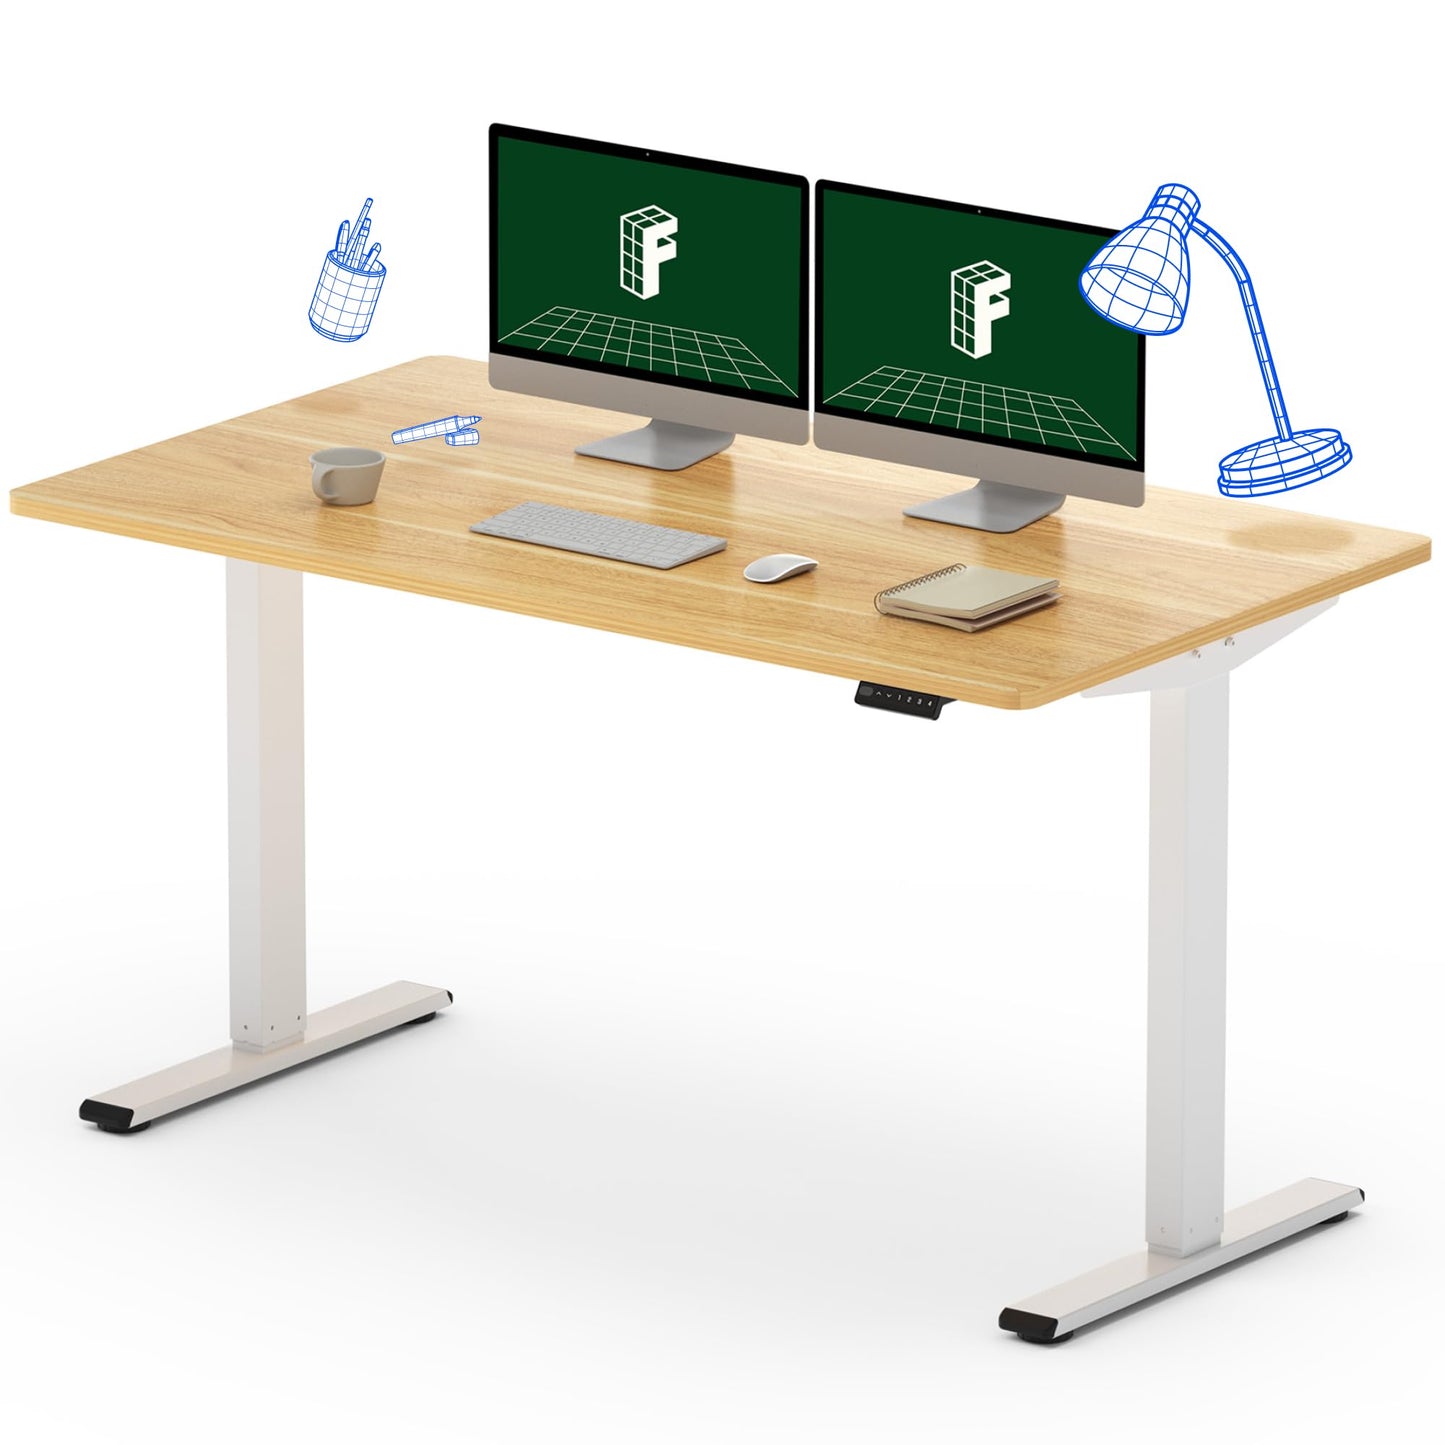 FLEXISPOT EN1 Height Adjustable Desk 55 x 28 Inches Whole-Piece Desk Ergonomic Memory Controller Standing Desk Stand Up Desk Workstation (White Frame